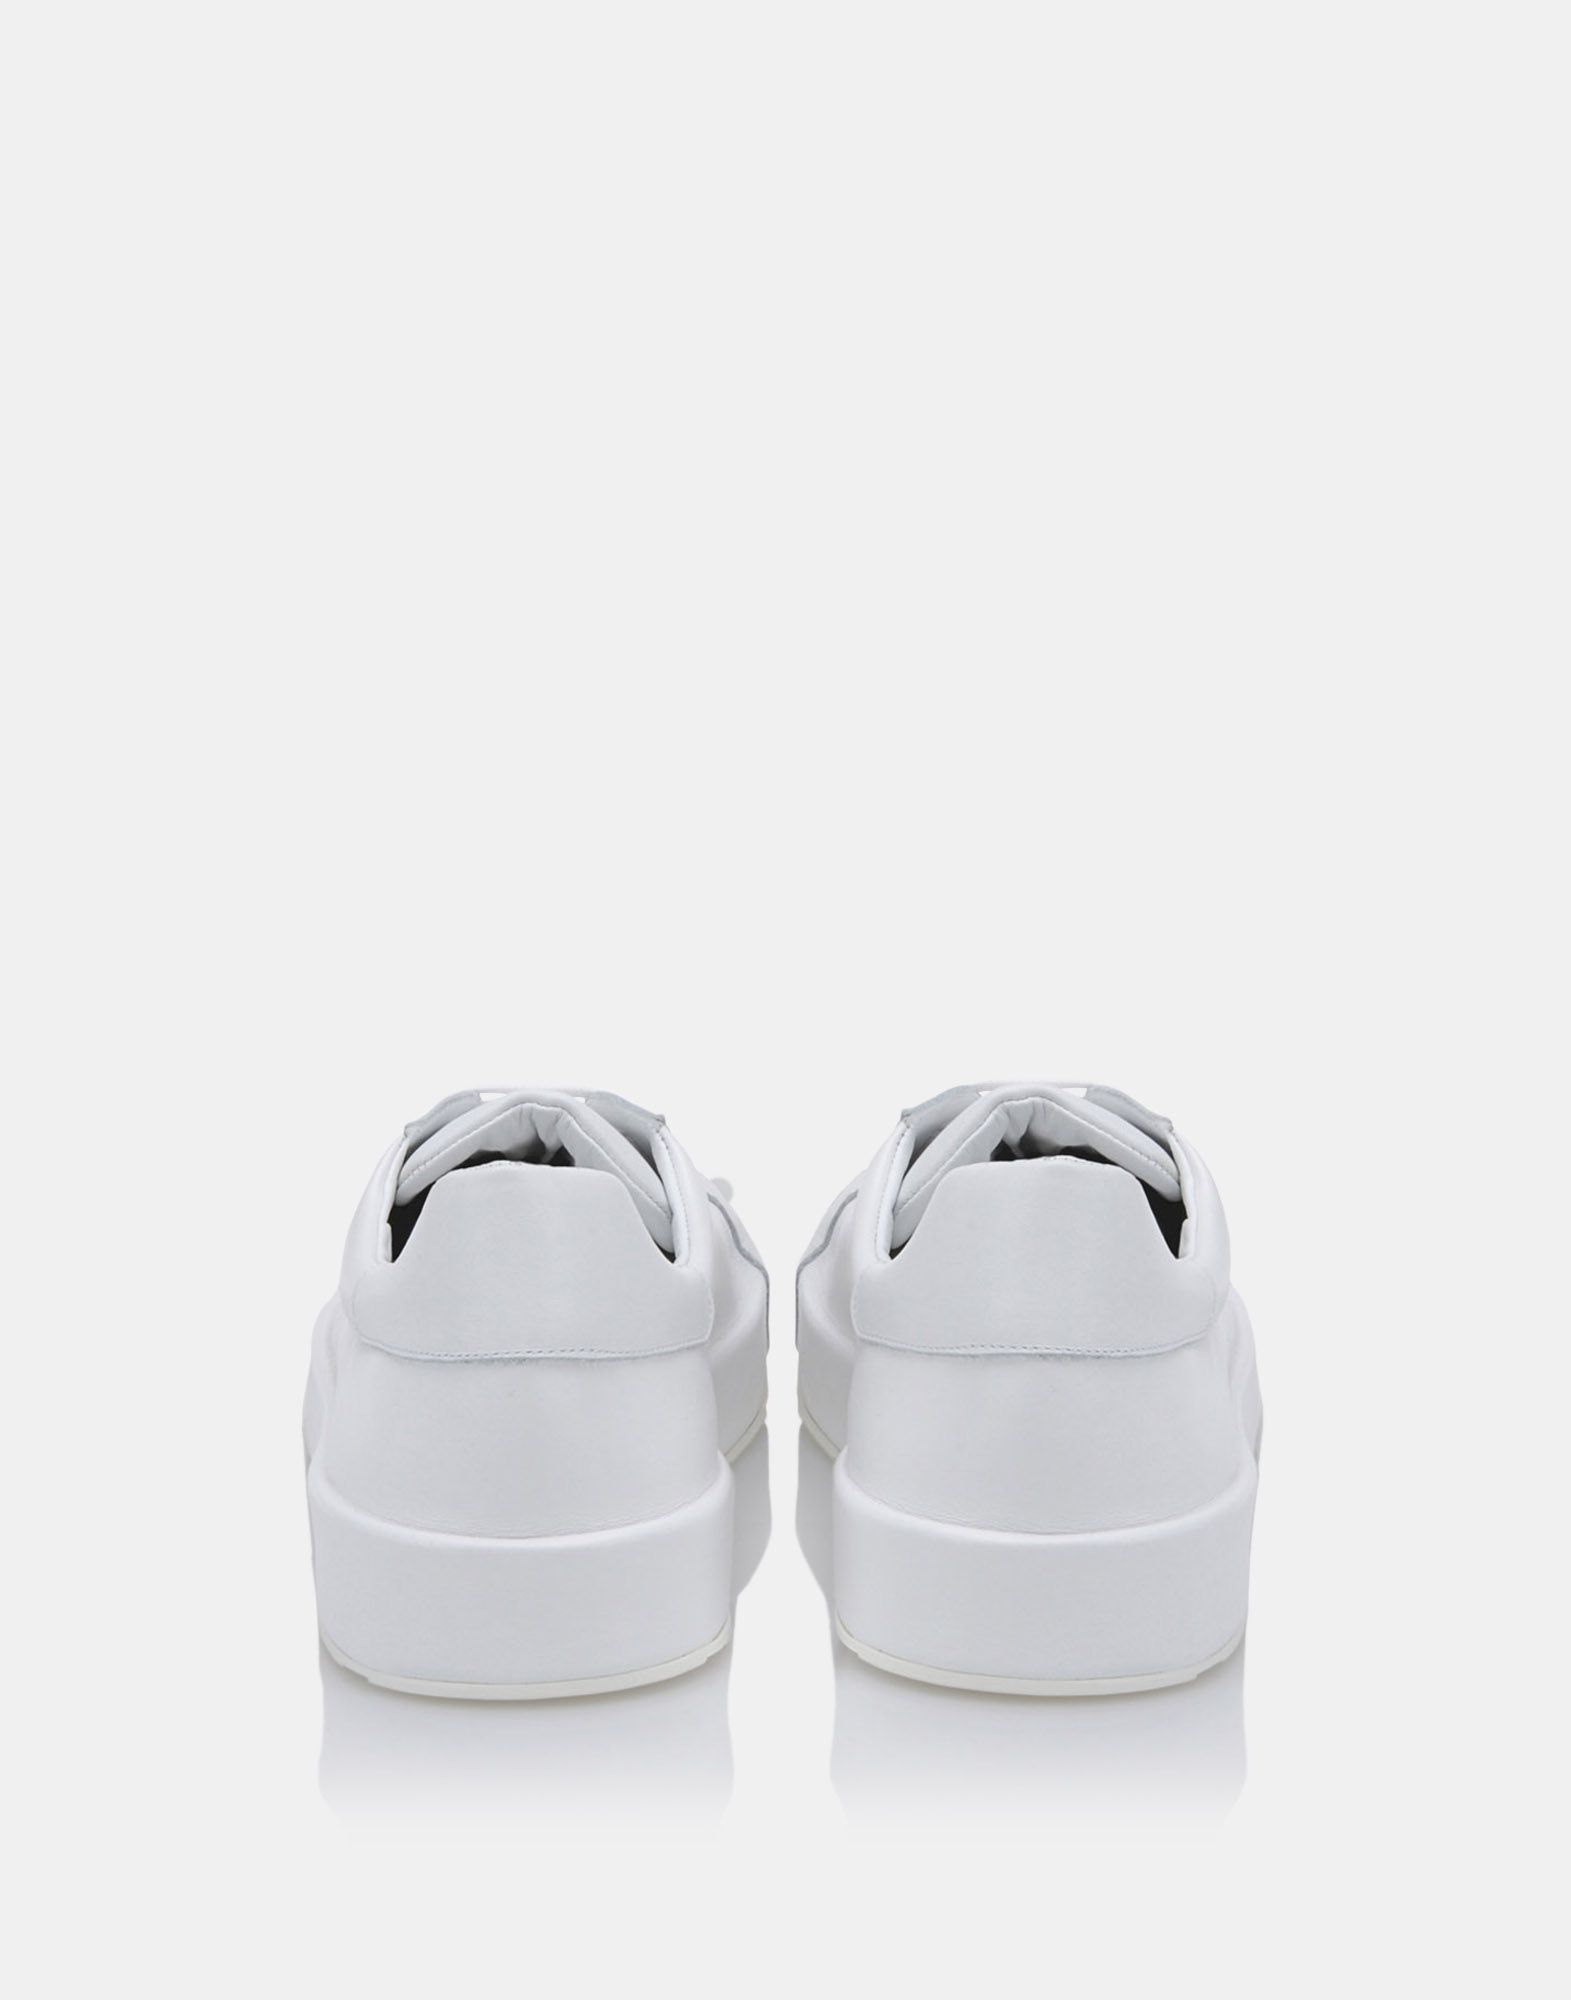 Sneakers Men - Shoes Men on Jil Sander Online Store